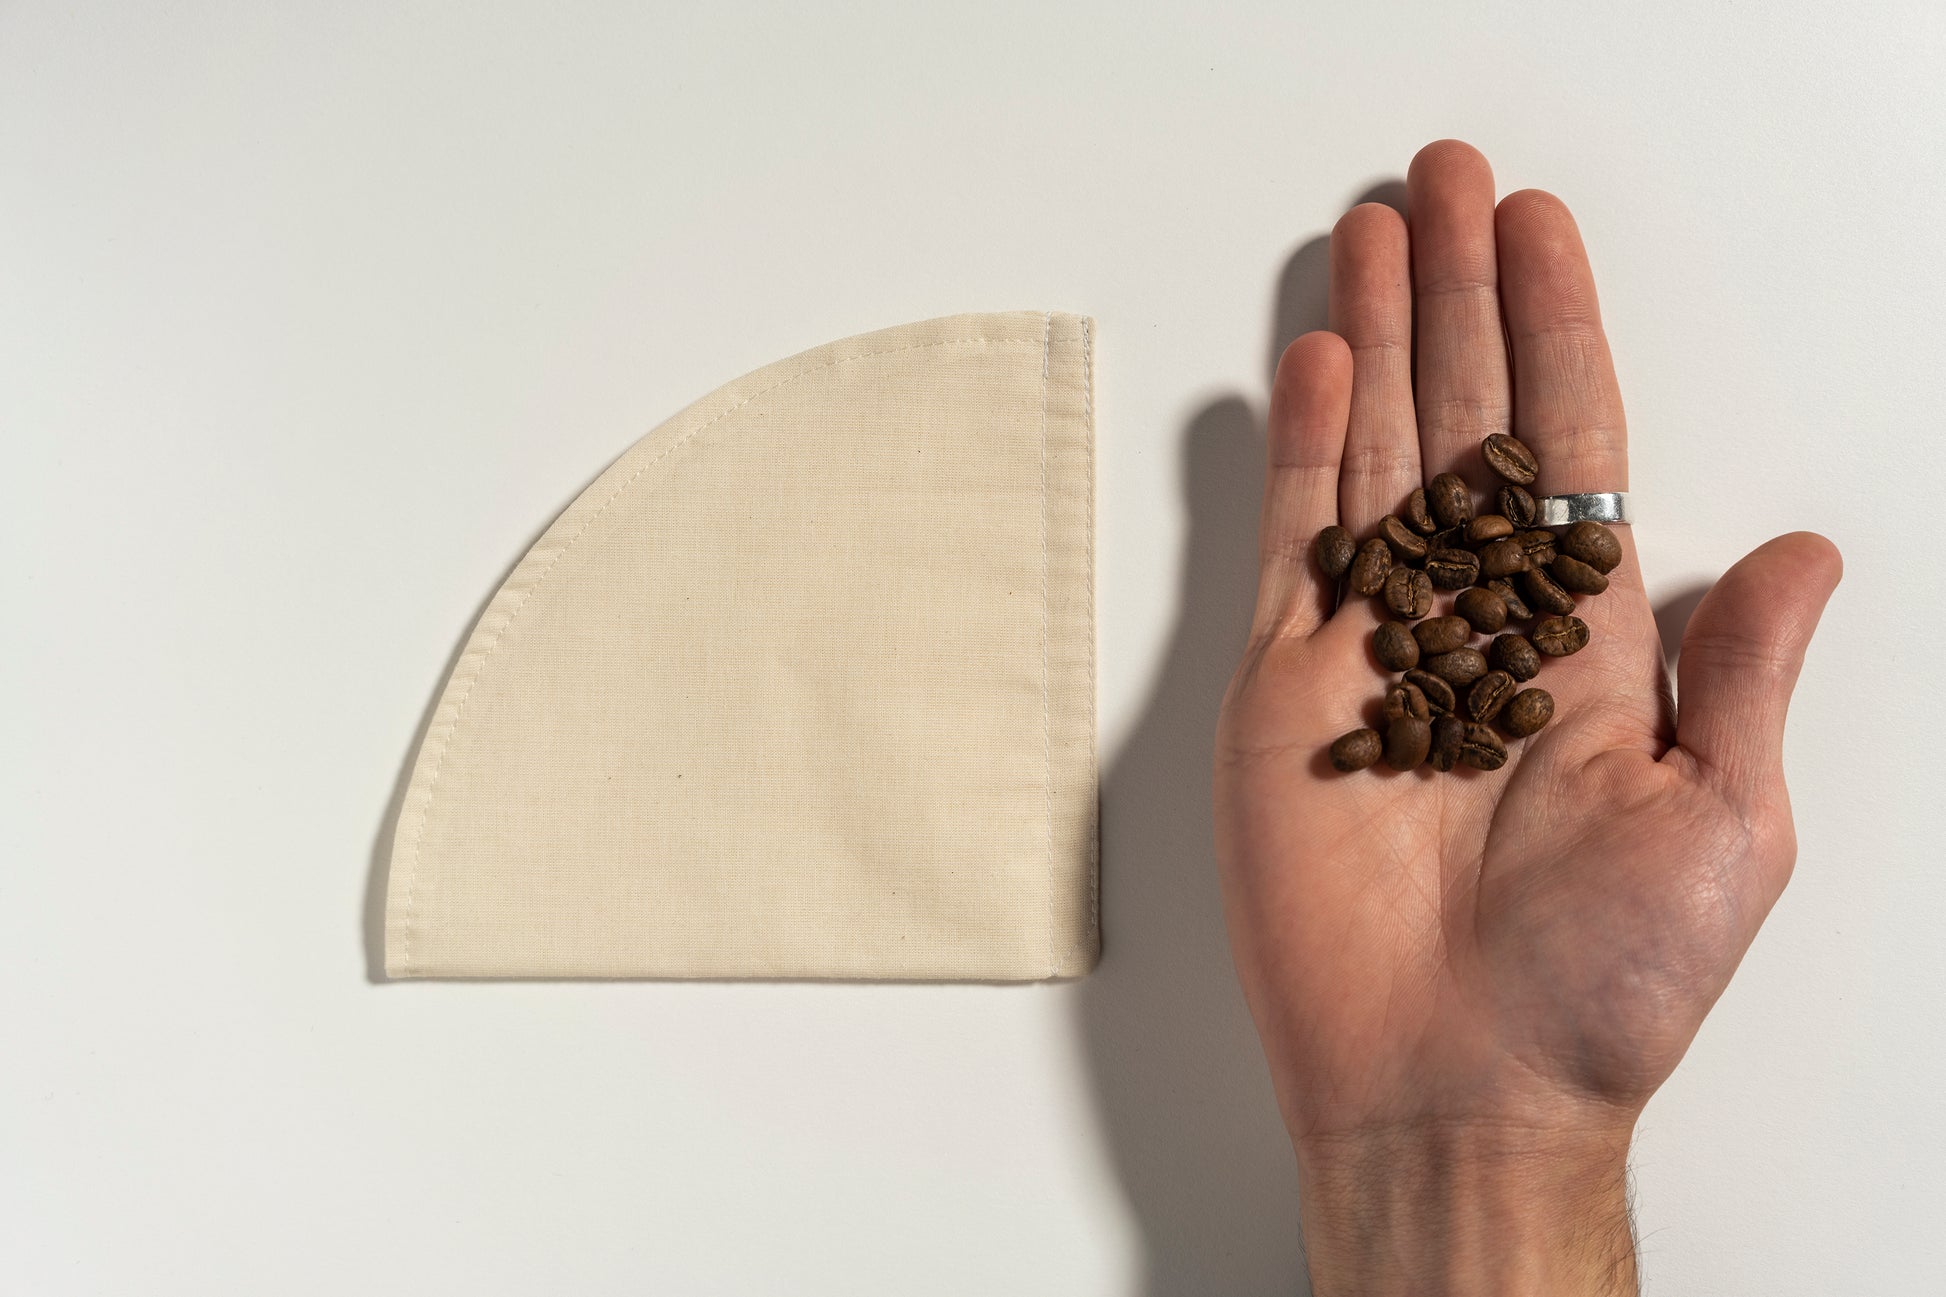 Aji Filter Reusable Cotton Coffee Filter Basic Barista Australia Melbourne